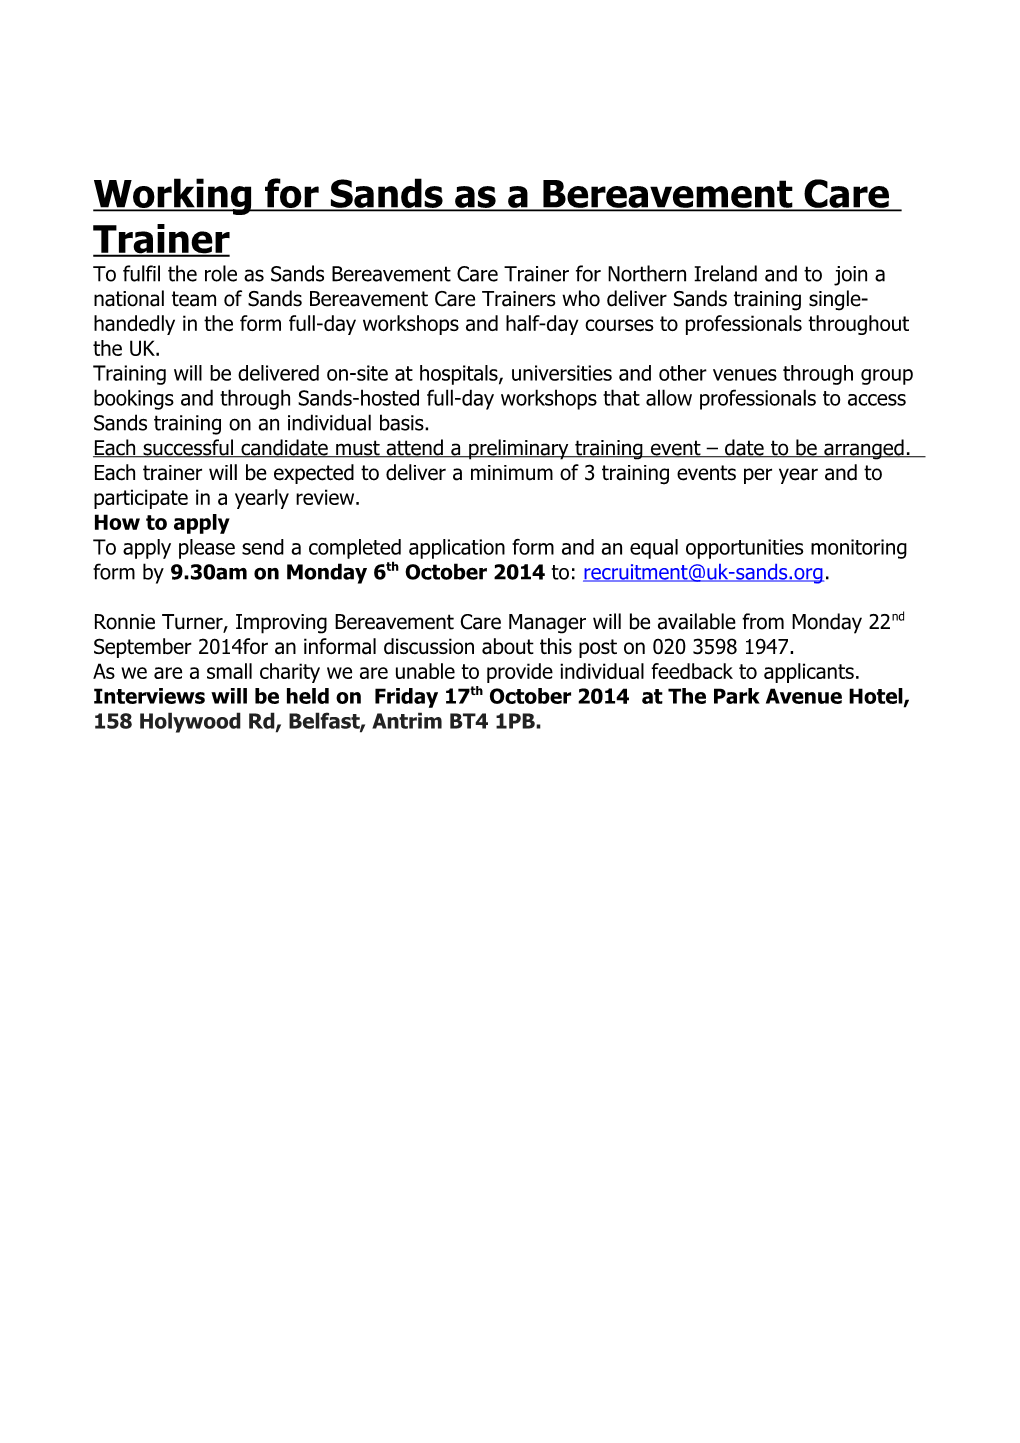 Sands Bereavement Care Trainer Northern Ireland